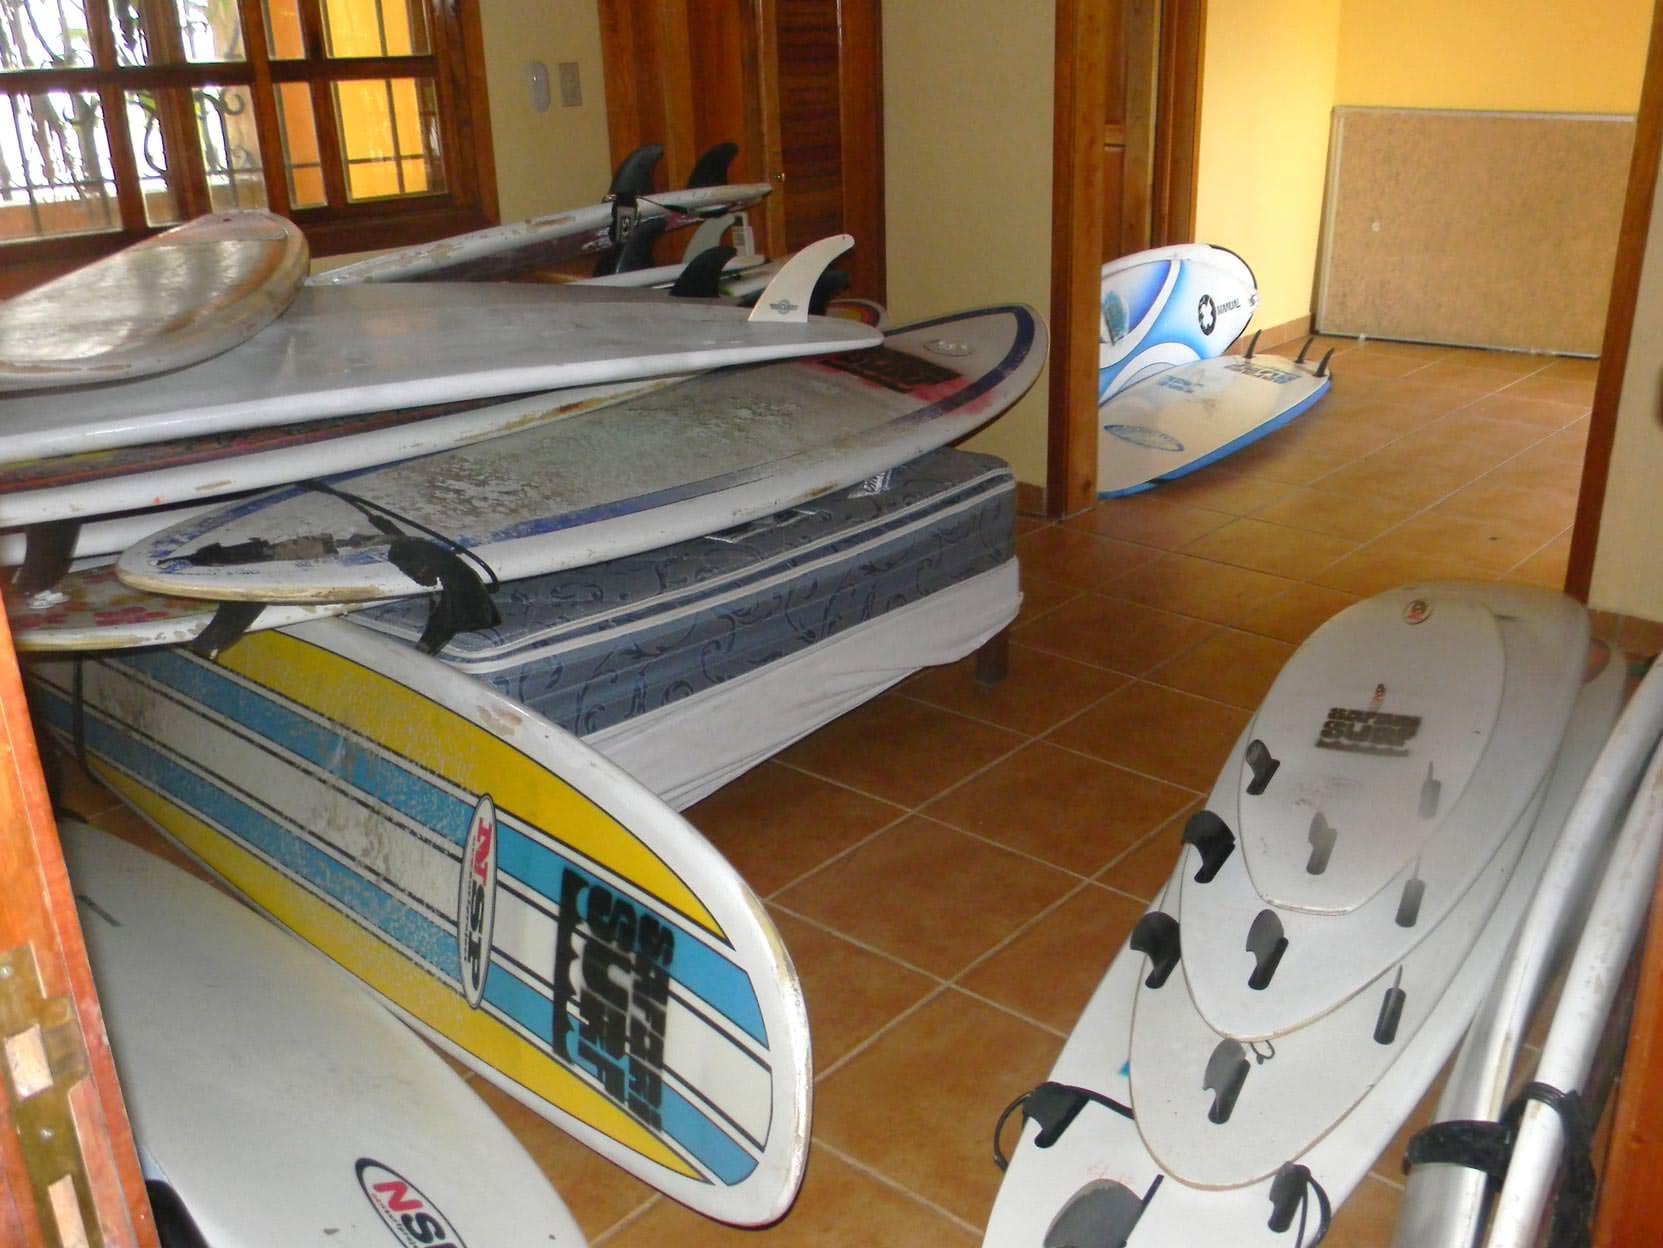 Safari Surf School - Getting Ready for the New Season